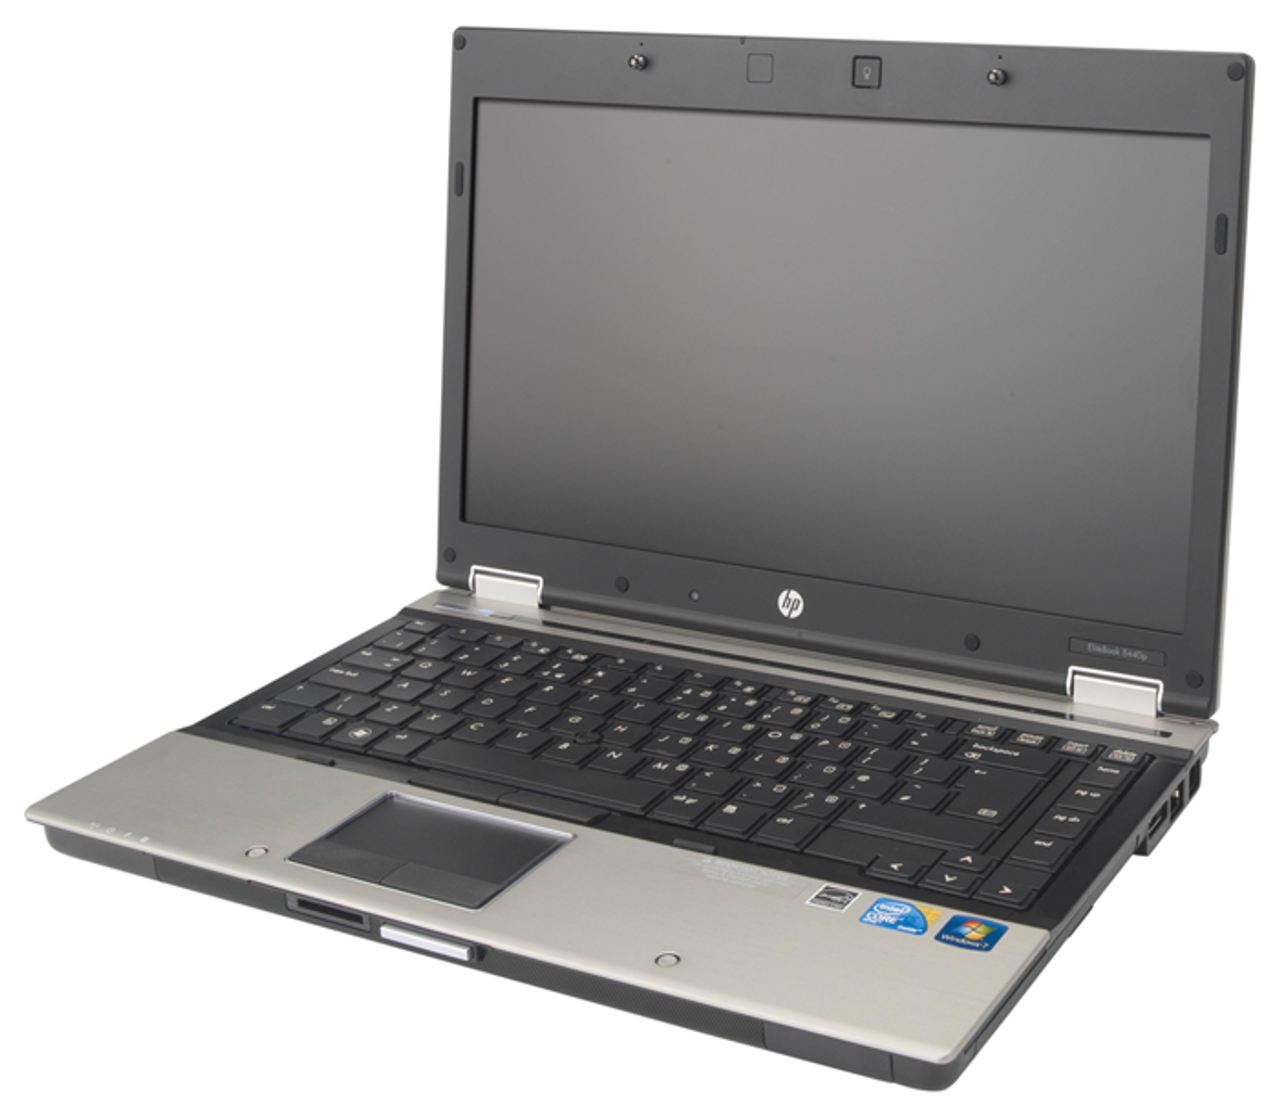 HP Compaq Elitebook 8440p Laptop Core i7 2.8GHz, 4GB Ram, 320GB HDD, DVD-RW, Notebook Windows 7 Pro 64 Notebook